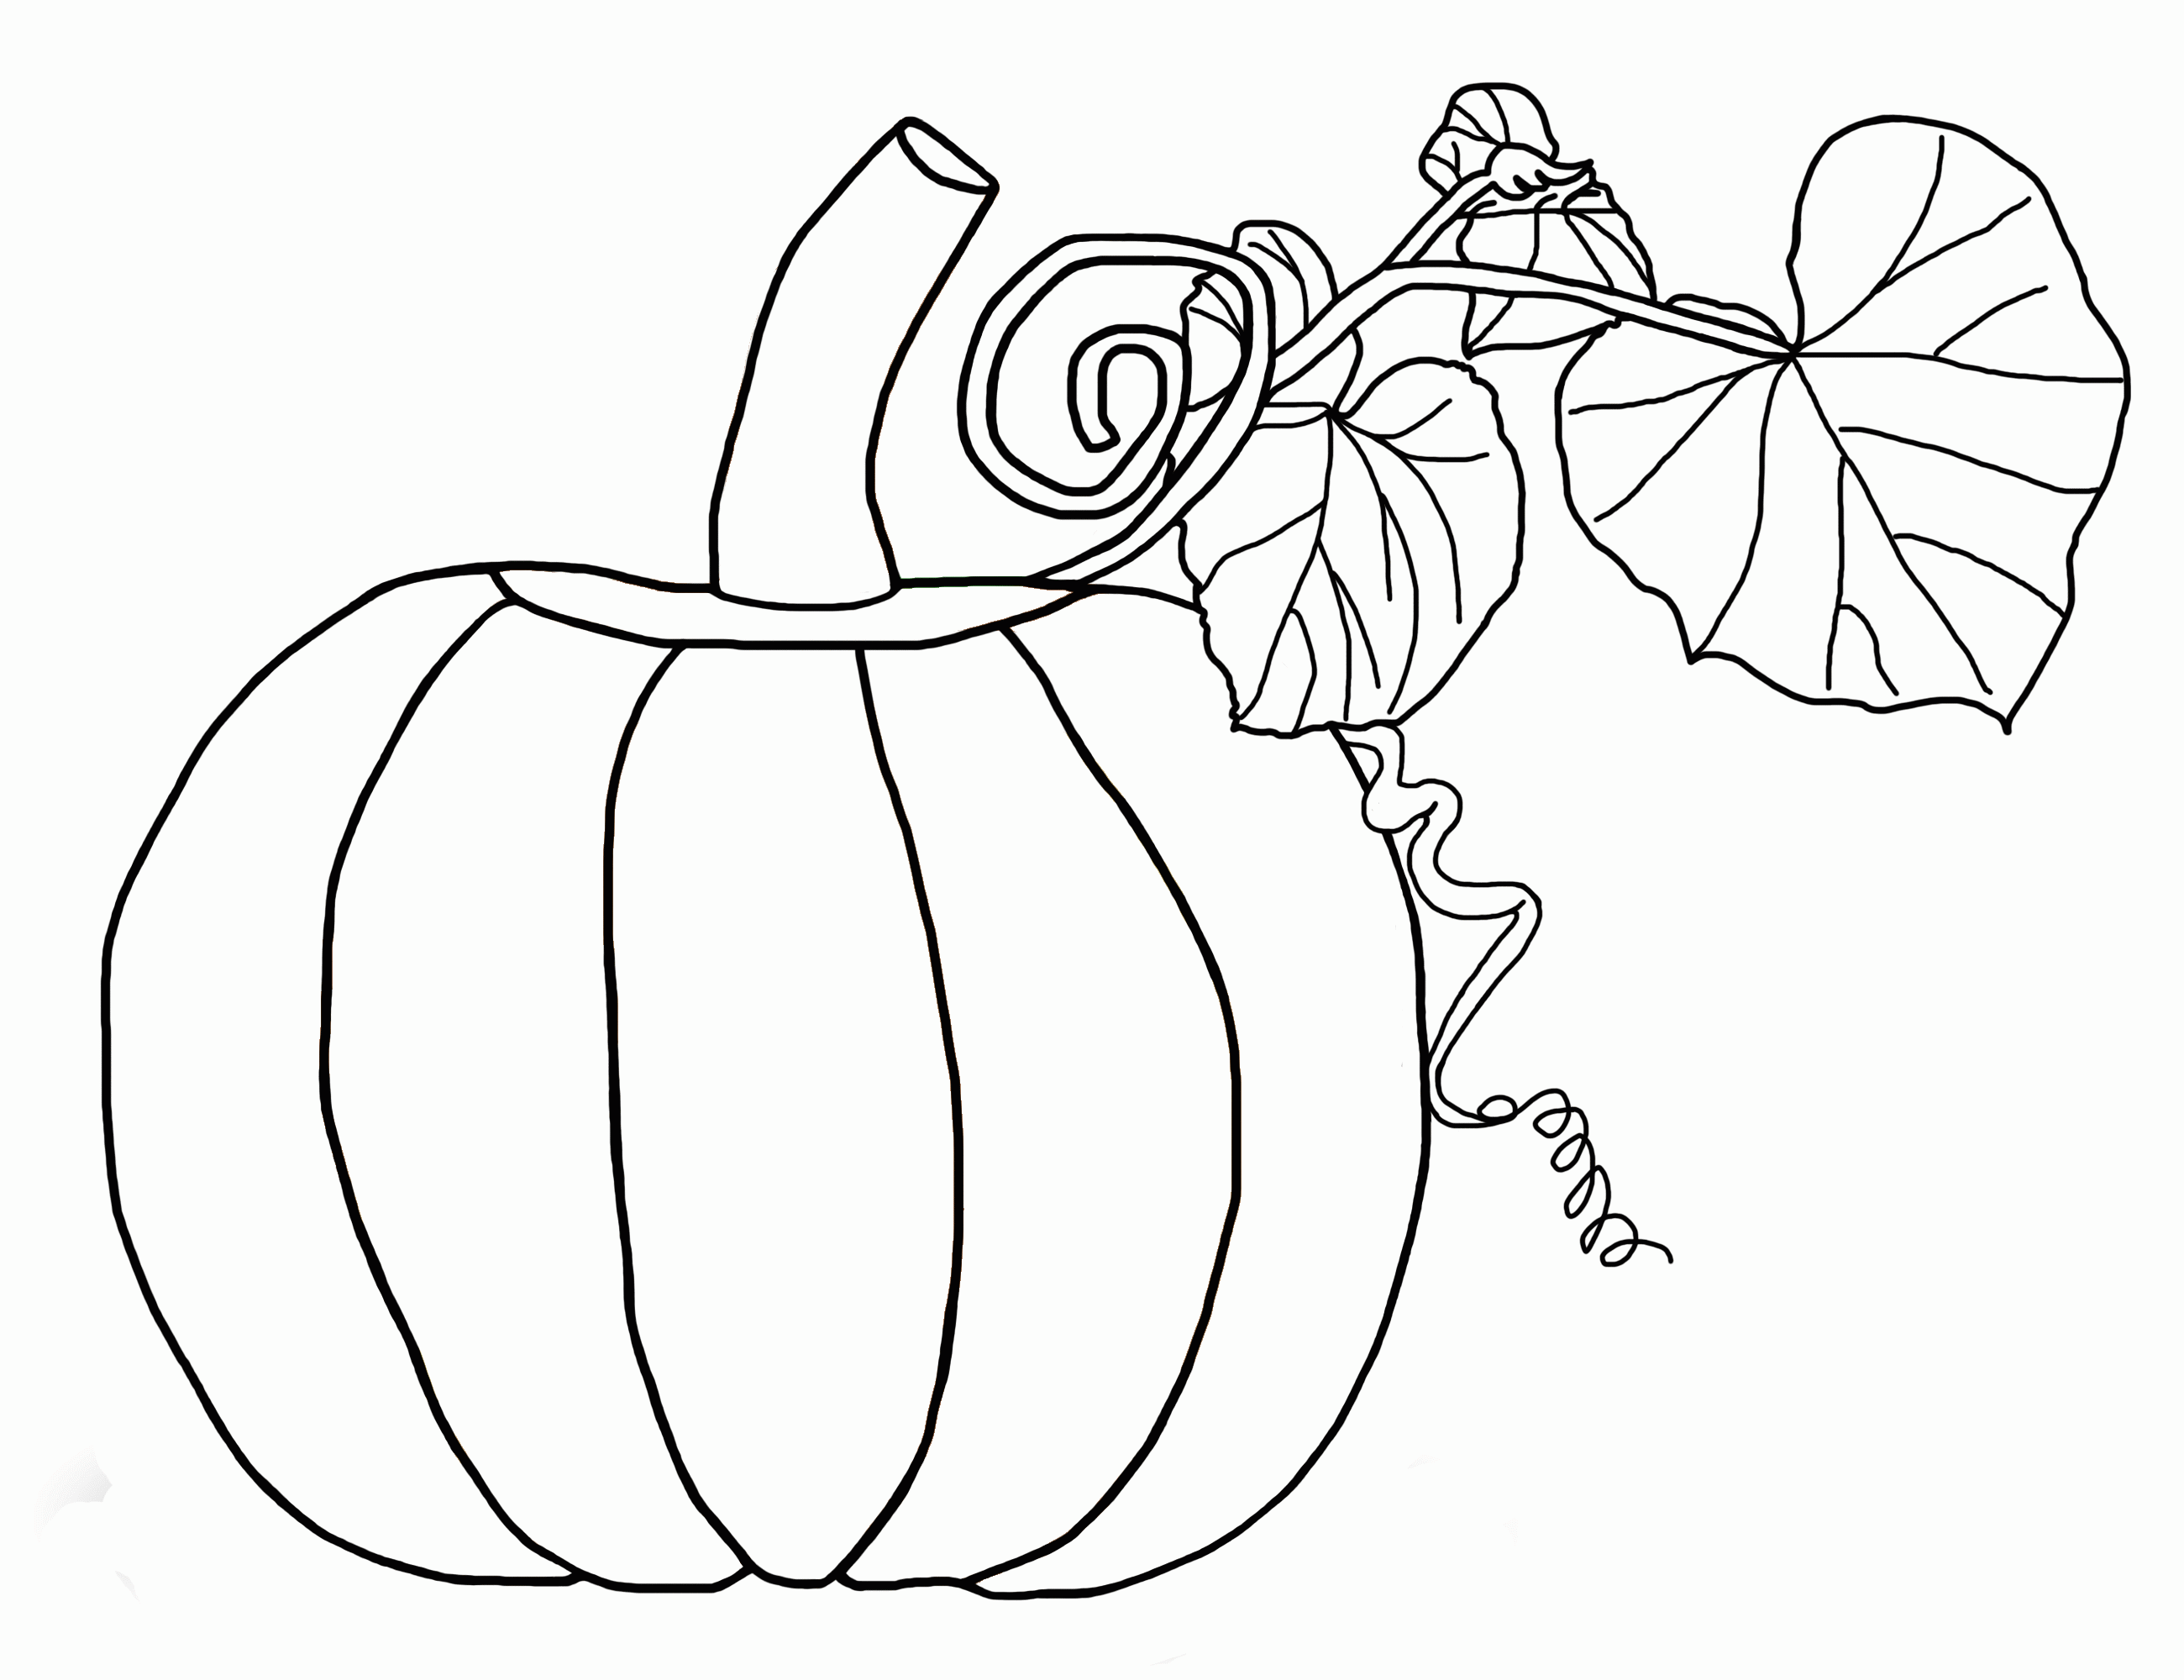 Printable Pumpkin Coloring Pages | Coloring Me